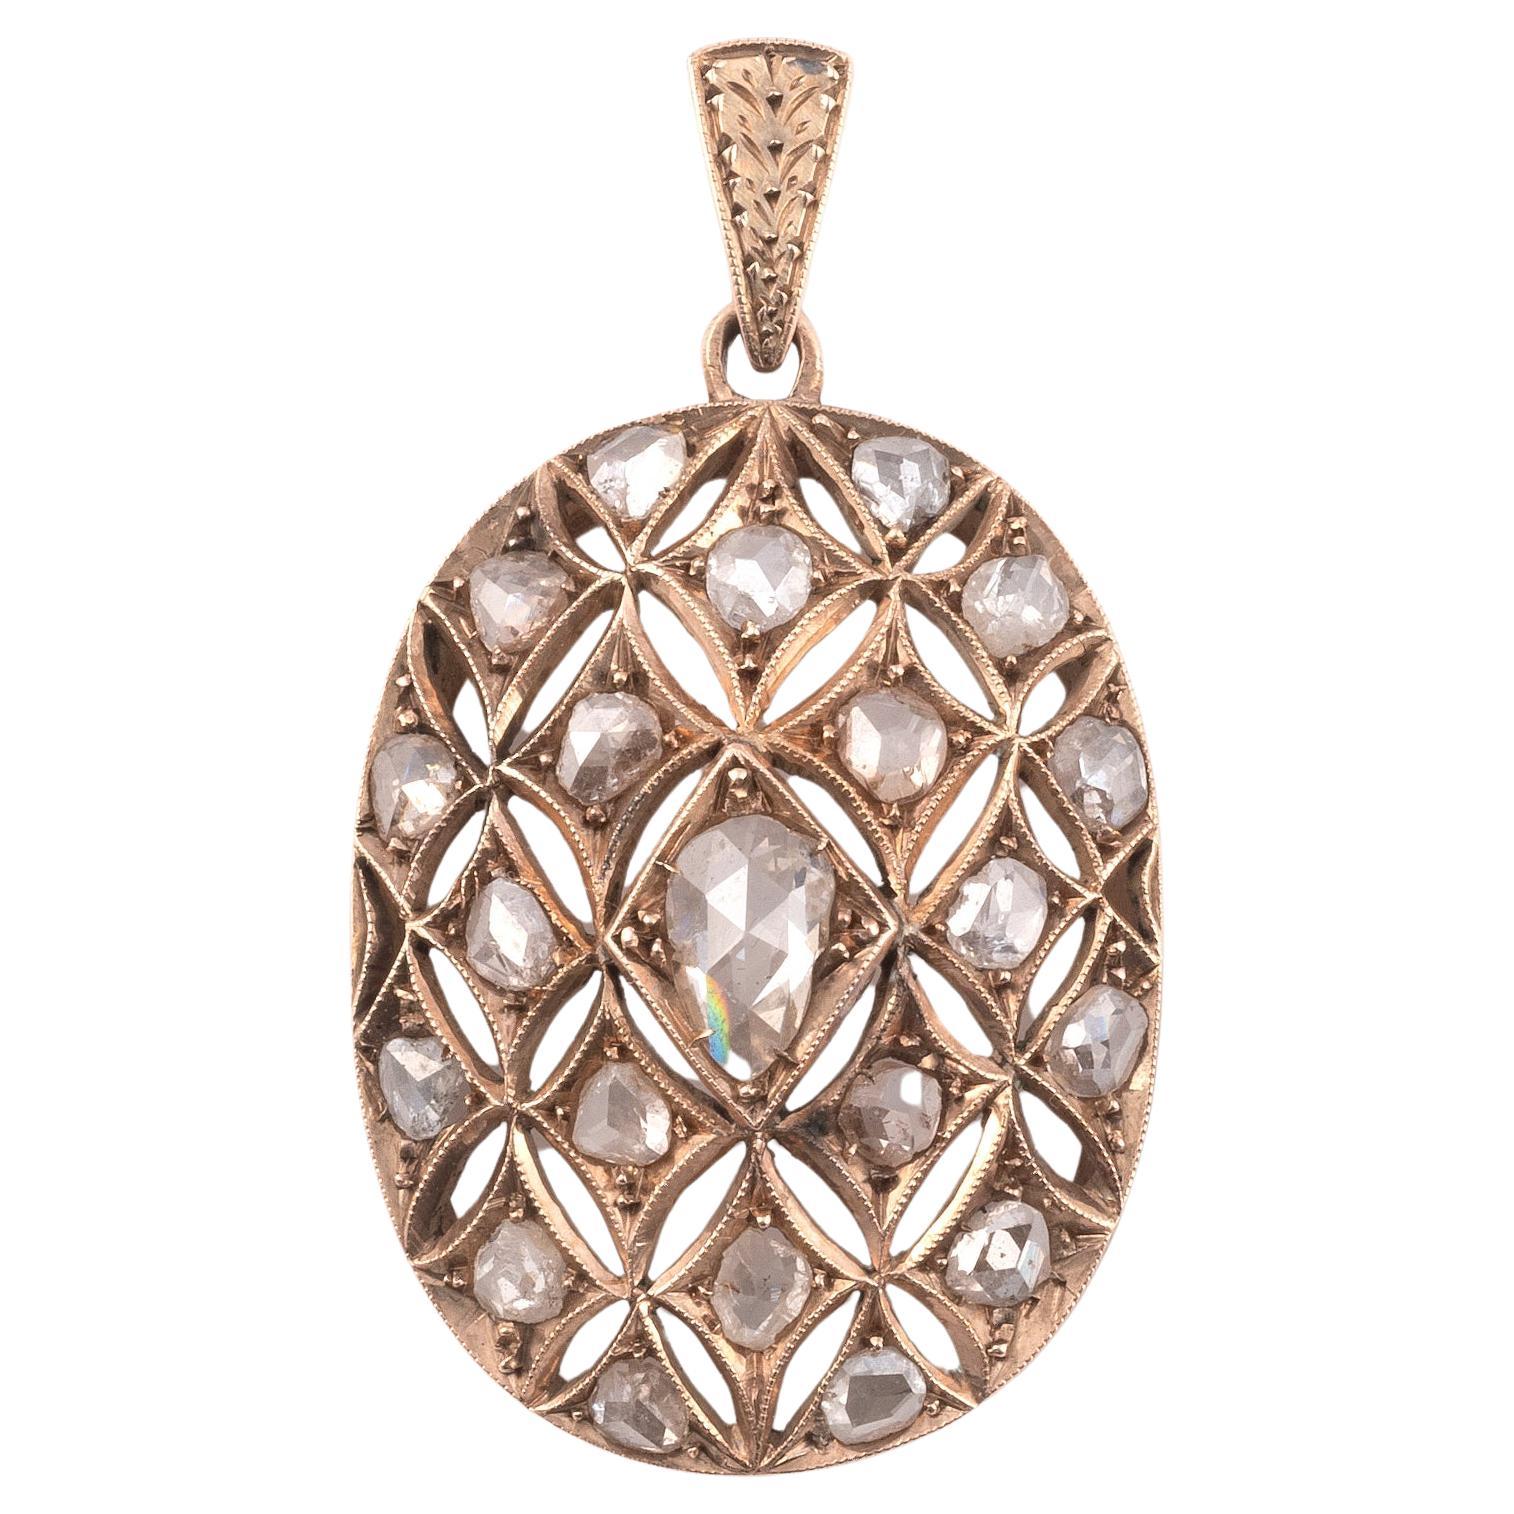 A 19th Century Rose-Cut Diamond Pendant